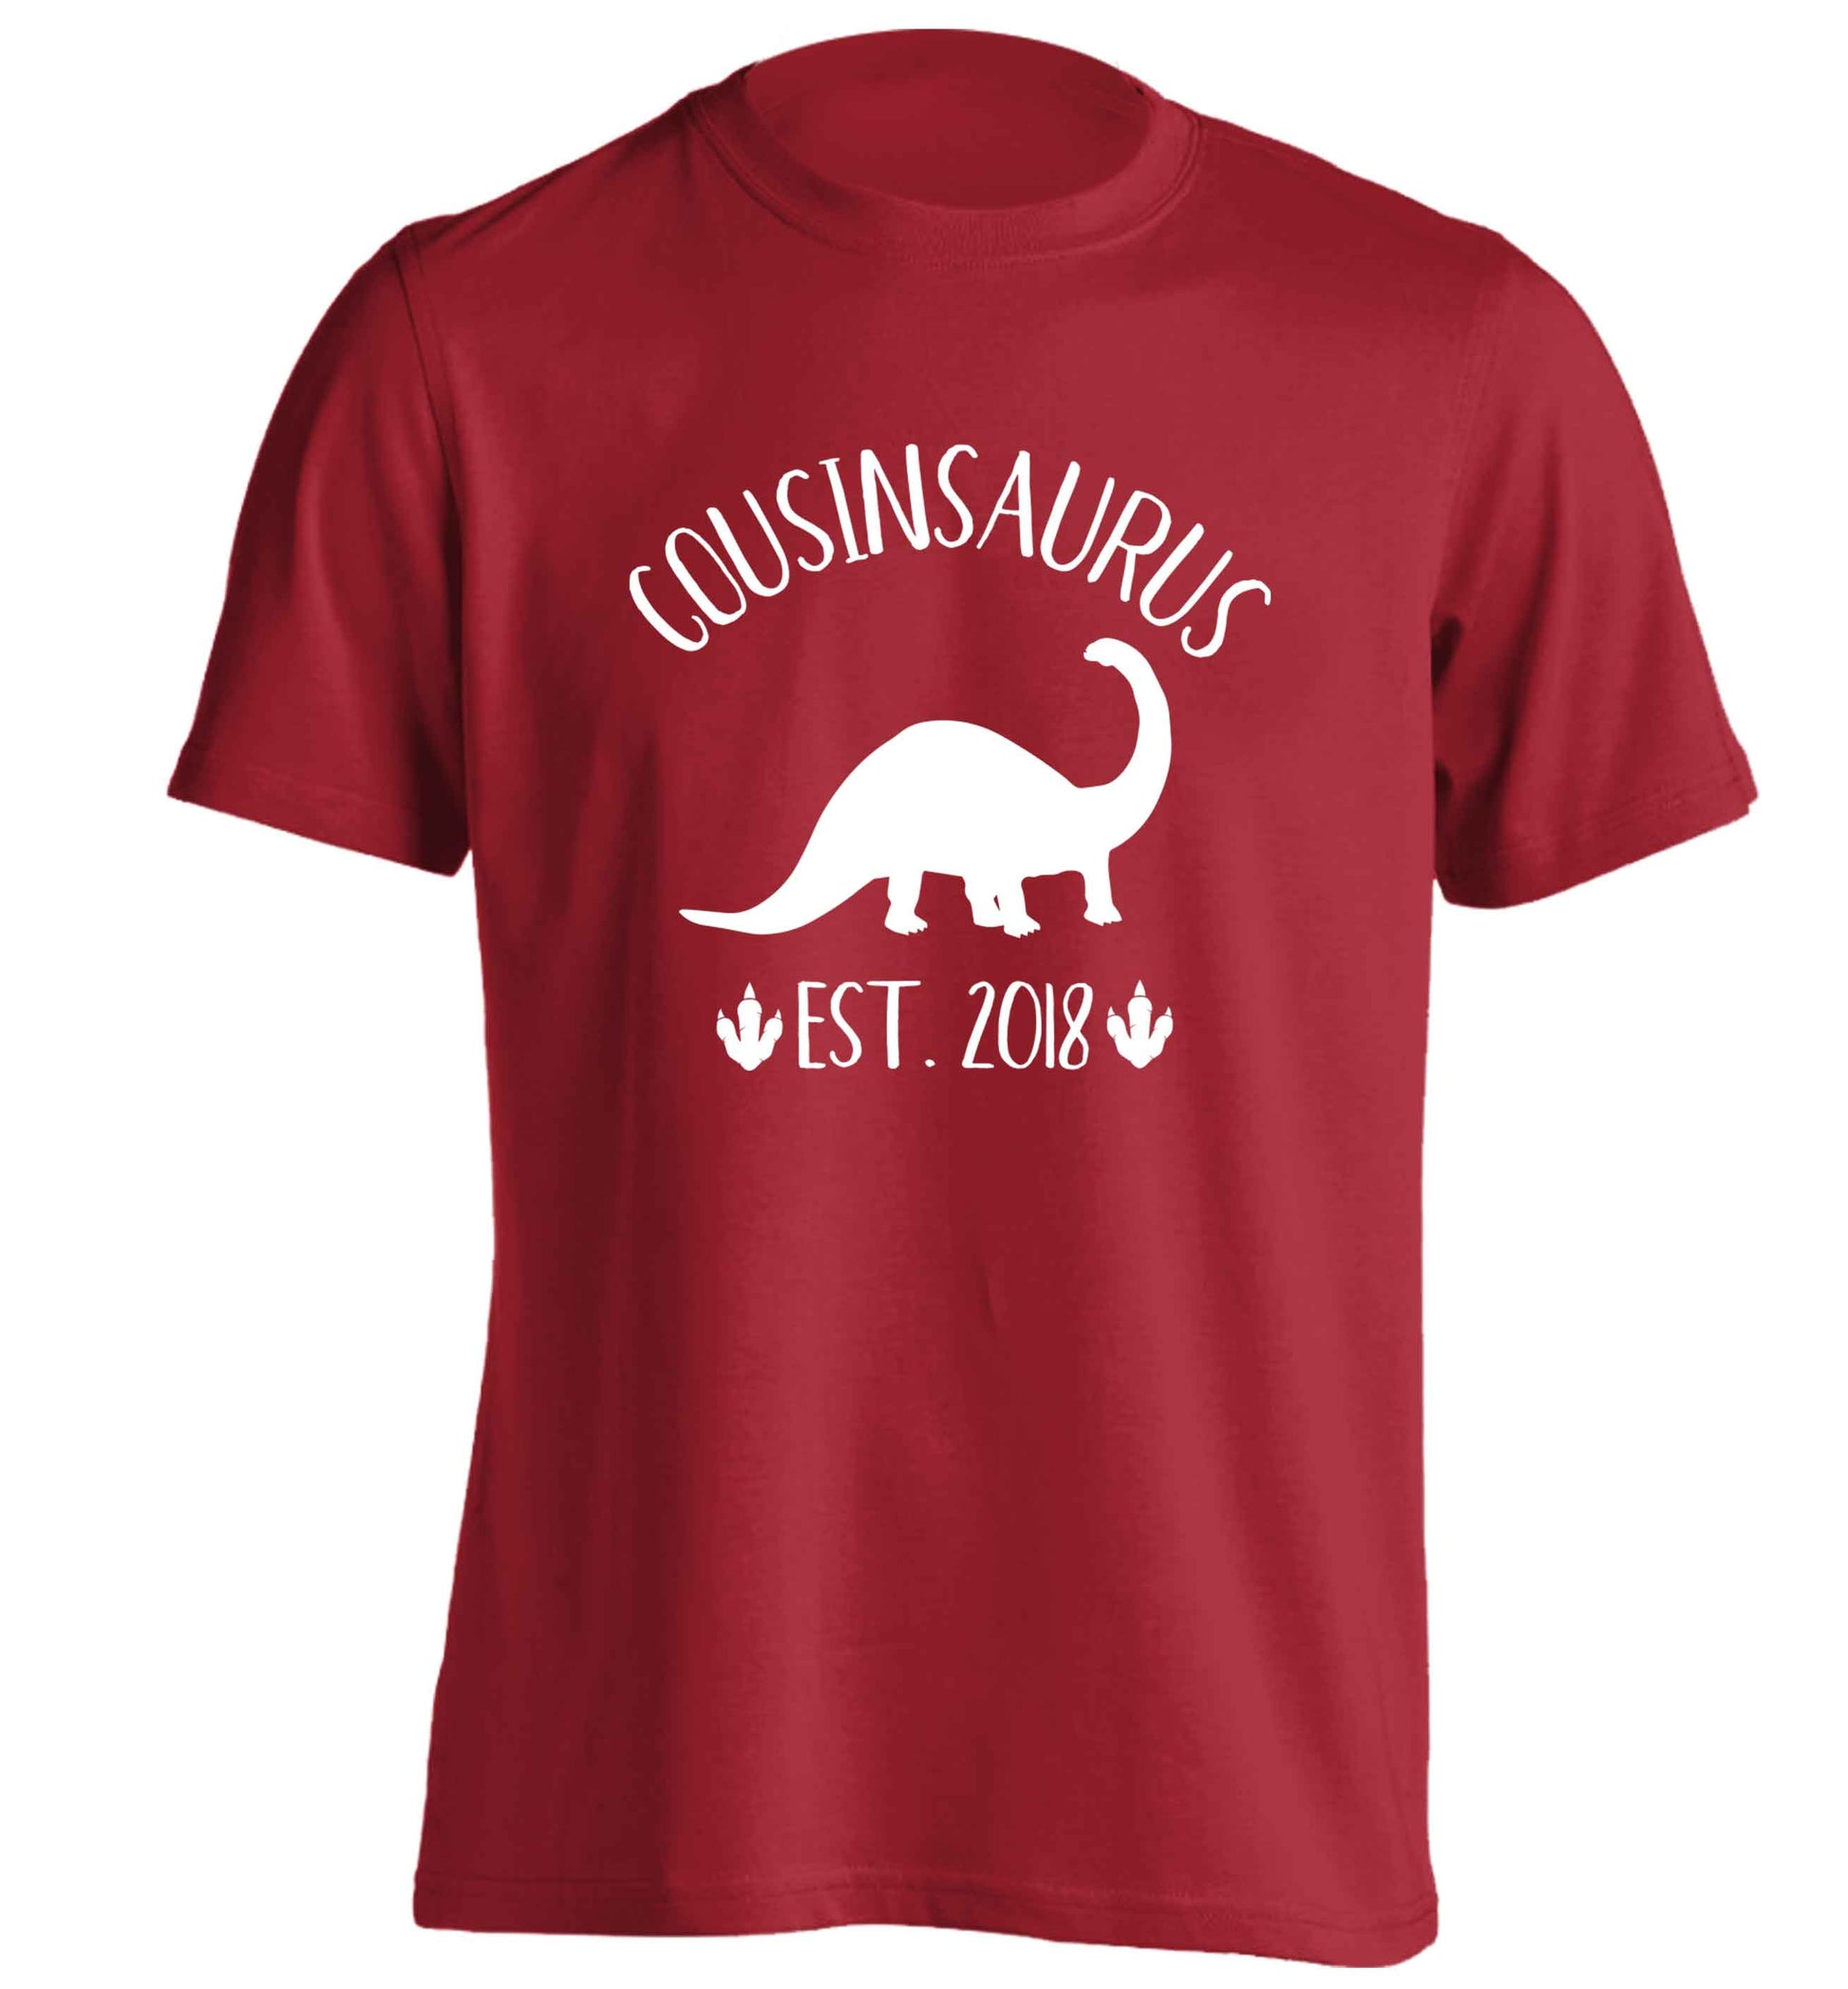 Personalised cousinsaurus since (custom date) adults unisex red Tshirt 2XL